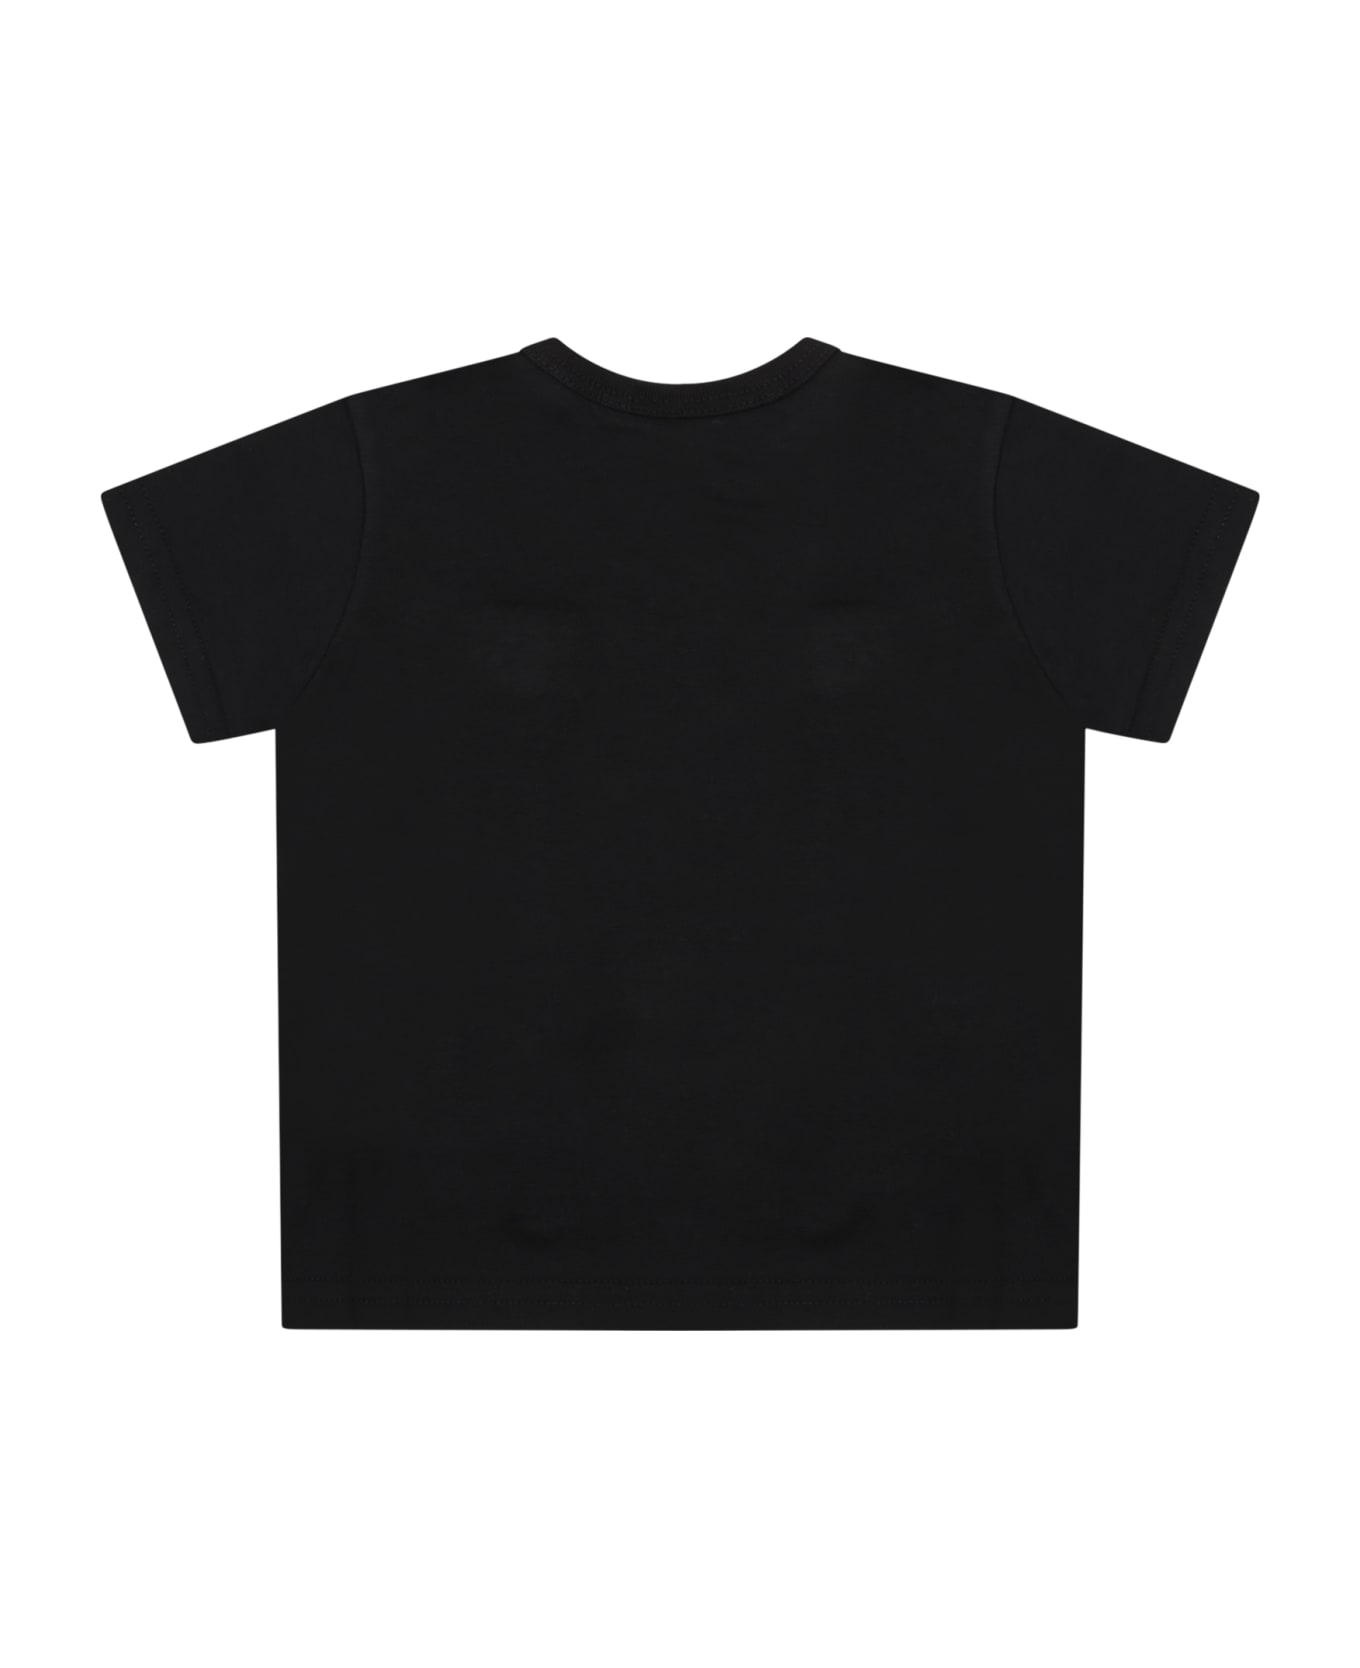 Dolce & Gabbana Black T-shirt For Baby Kids With Logo - Black